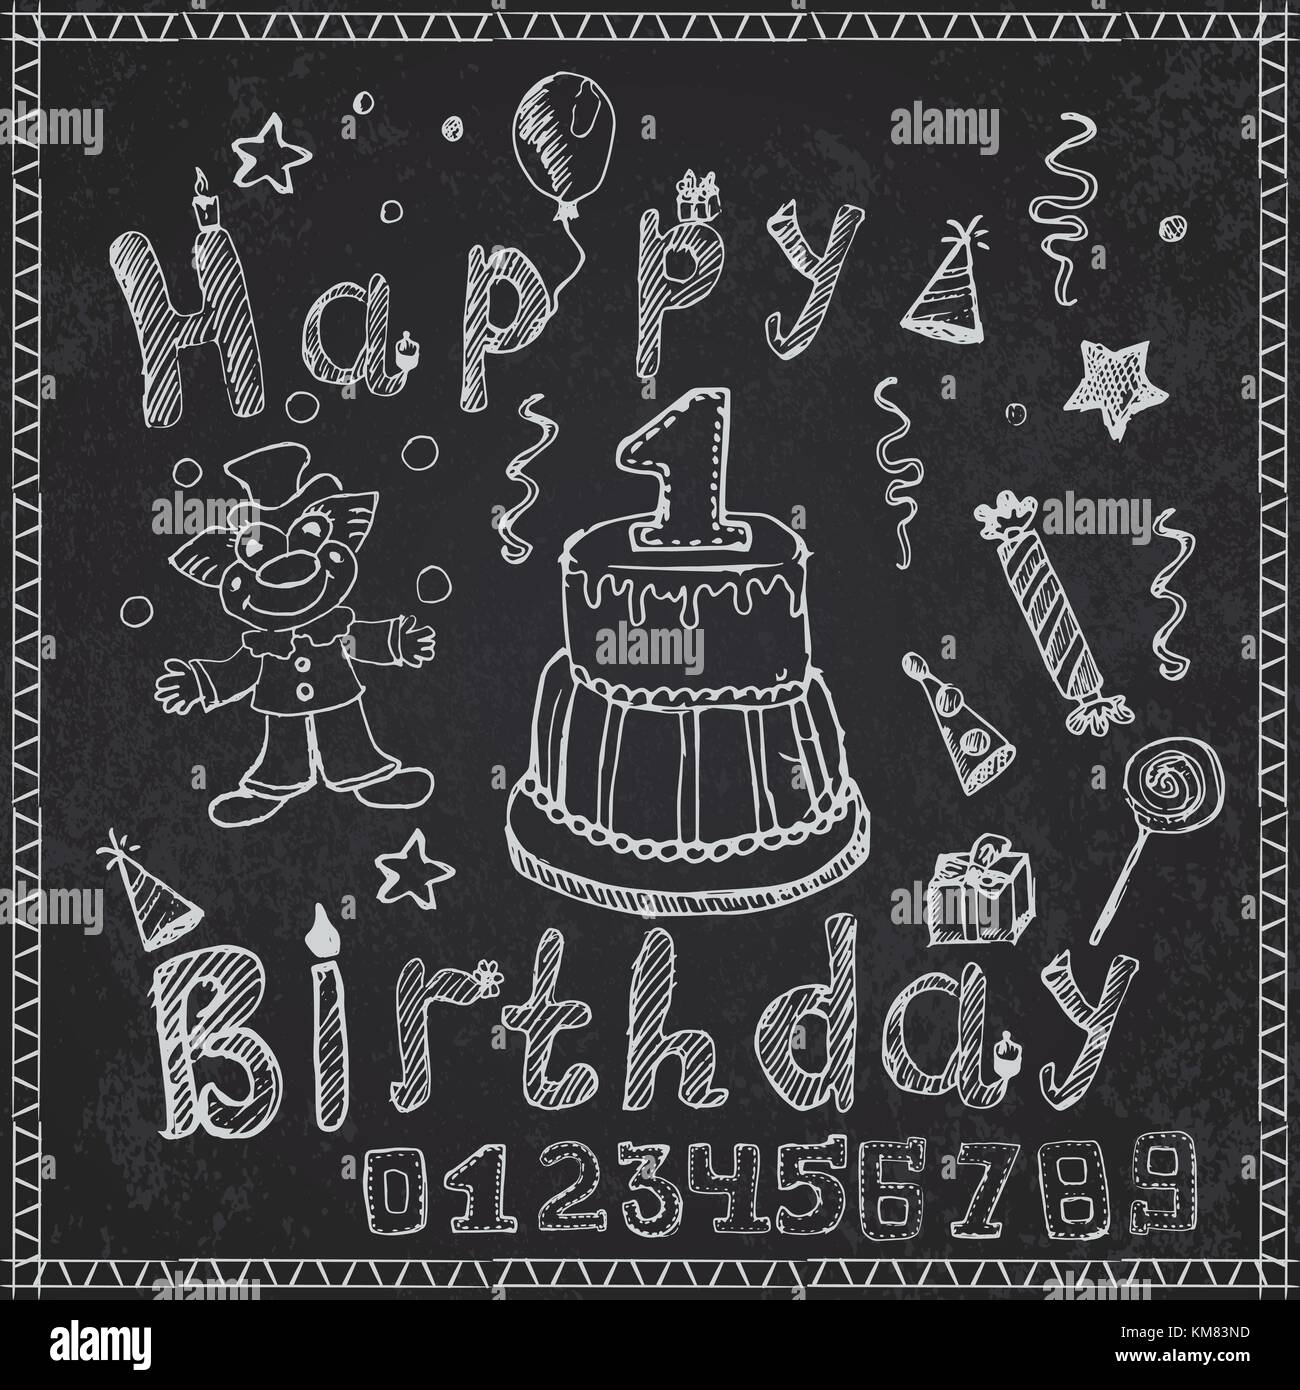 Birthday Sketch Images  Free Download on Freepik